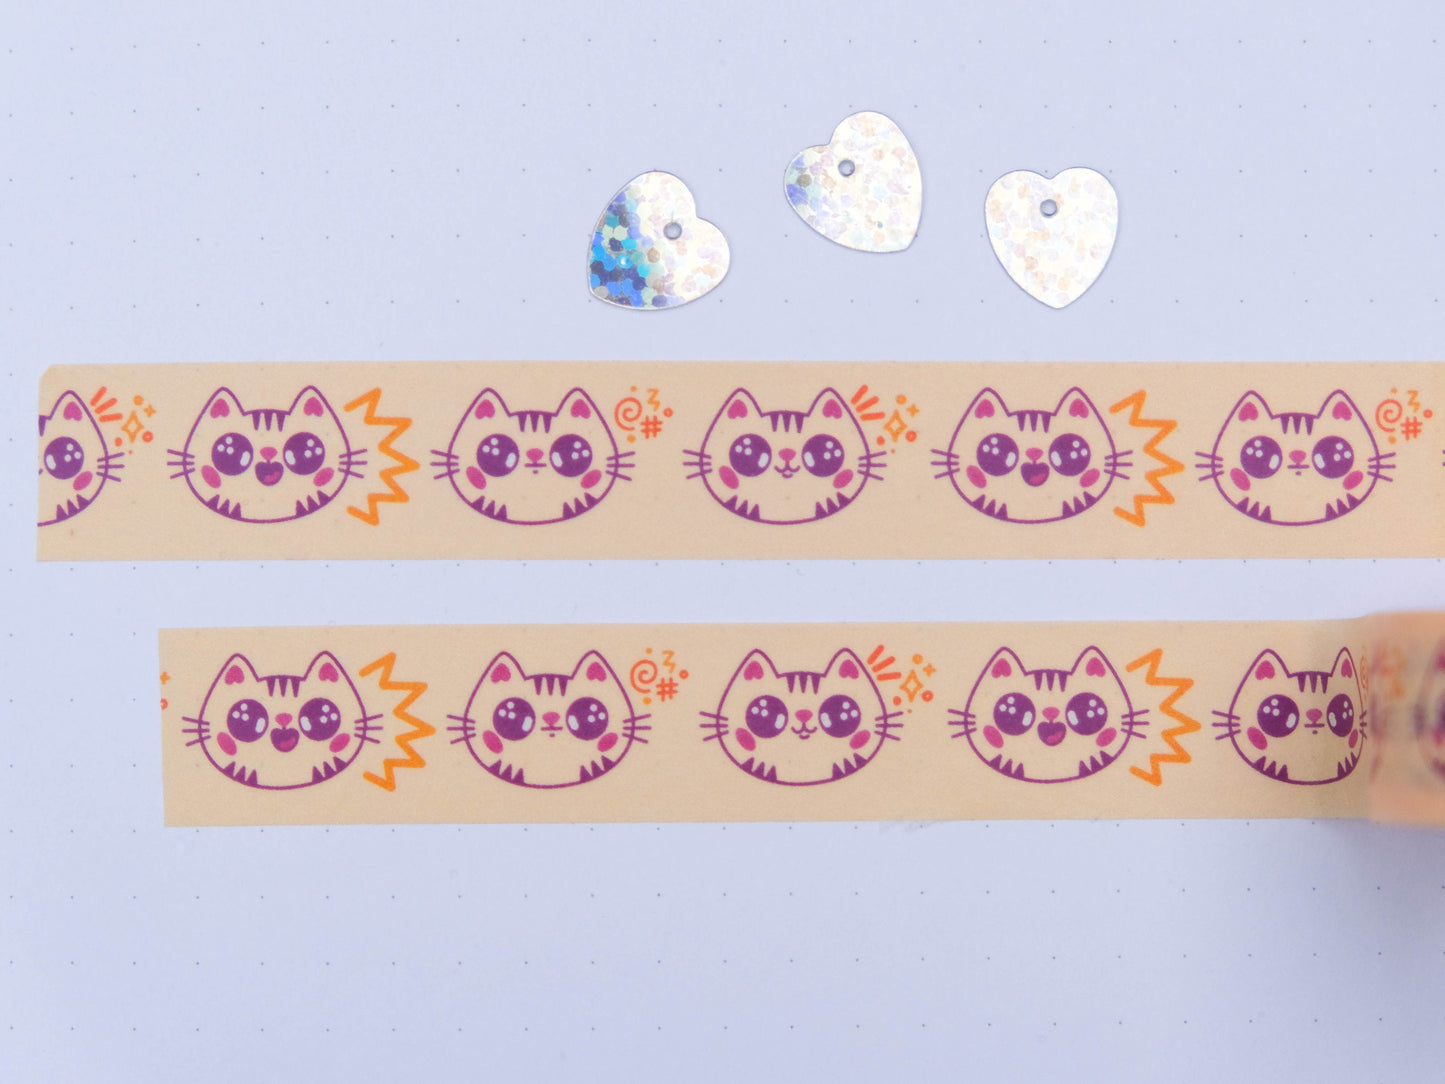 Cute Cat Washi tape 15mmx10m - Stationary - Scrapbooking Washi Tape - Bullet Journal - Cute Kitty Washi Tape - Emotions Washi Tape